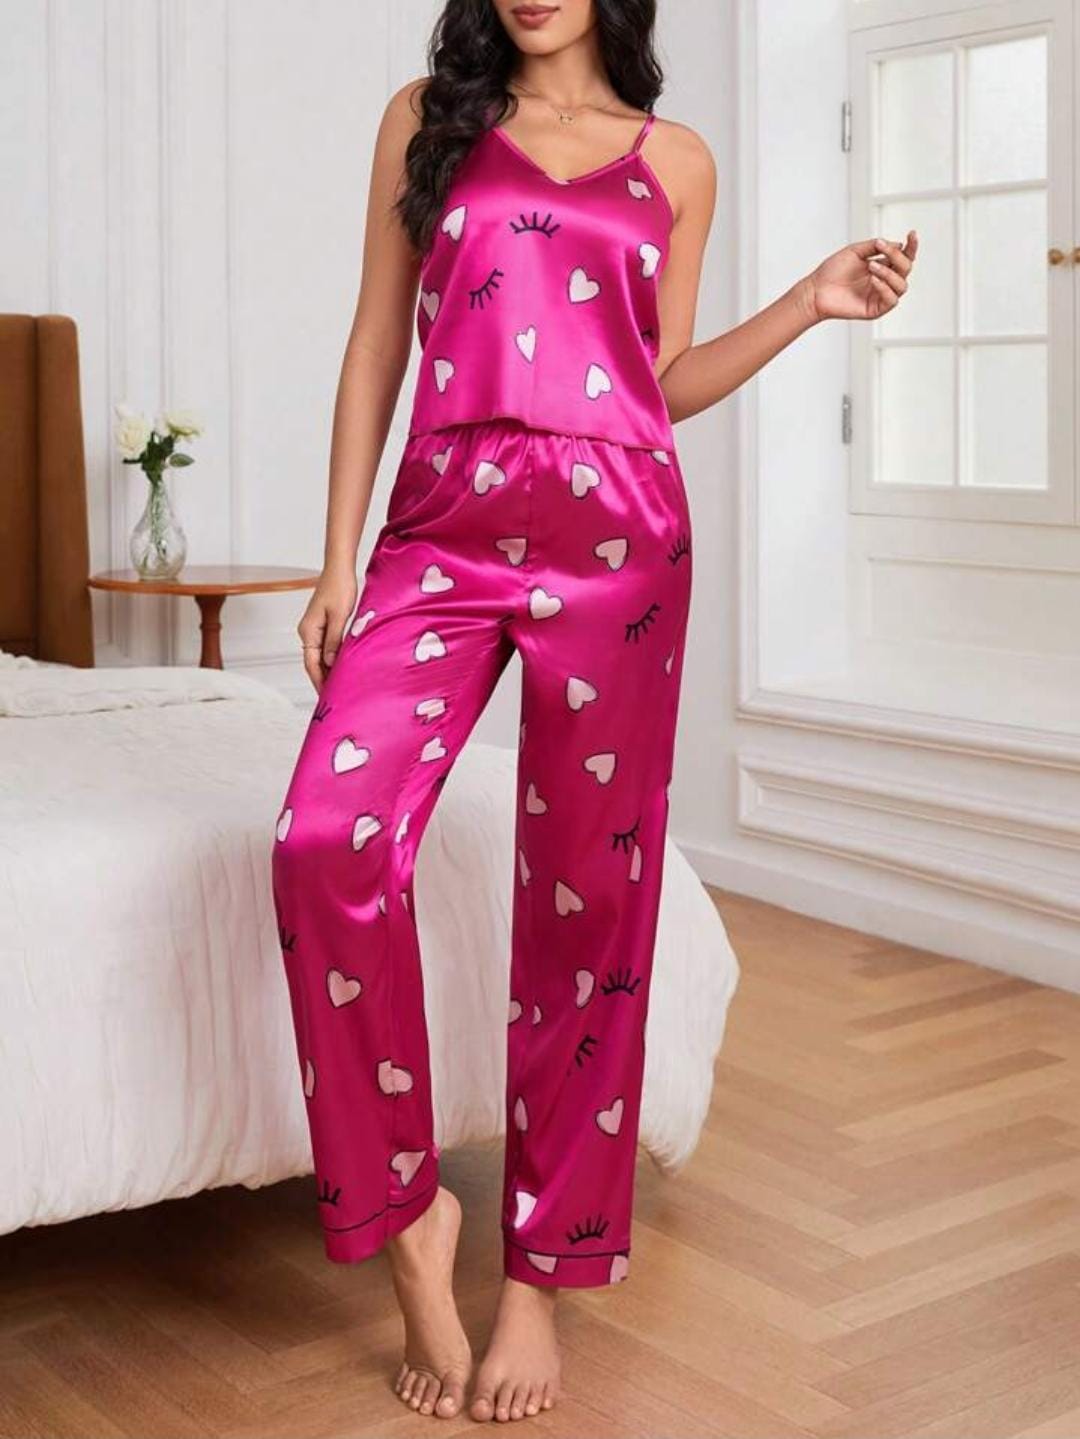 Sajiero Spice Ceder Strap Jumpsuit Printed Pink Hearst best quality summer sleeveless nightwear for women price in pakistan 